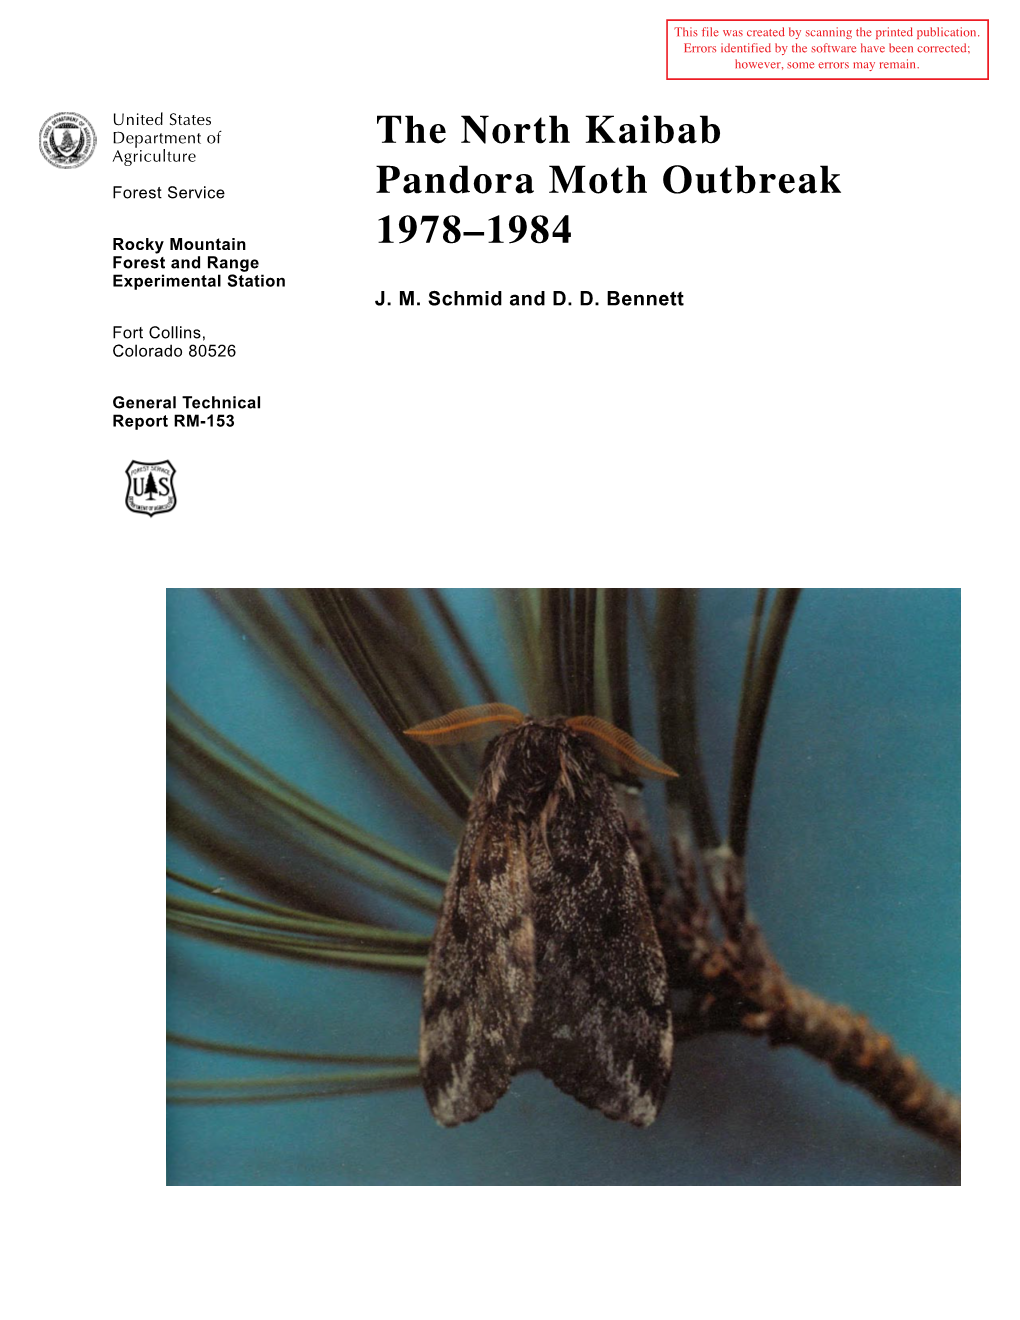 The North Kaibab Pandora Moth Outbreak, 1978-1984